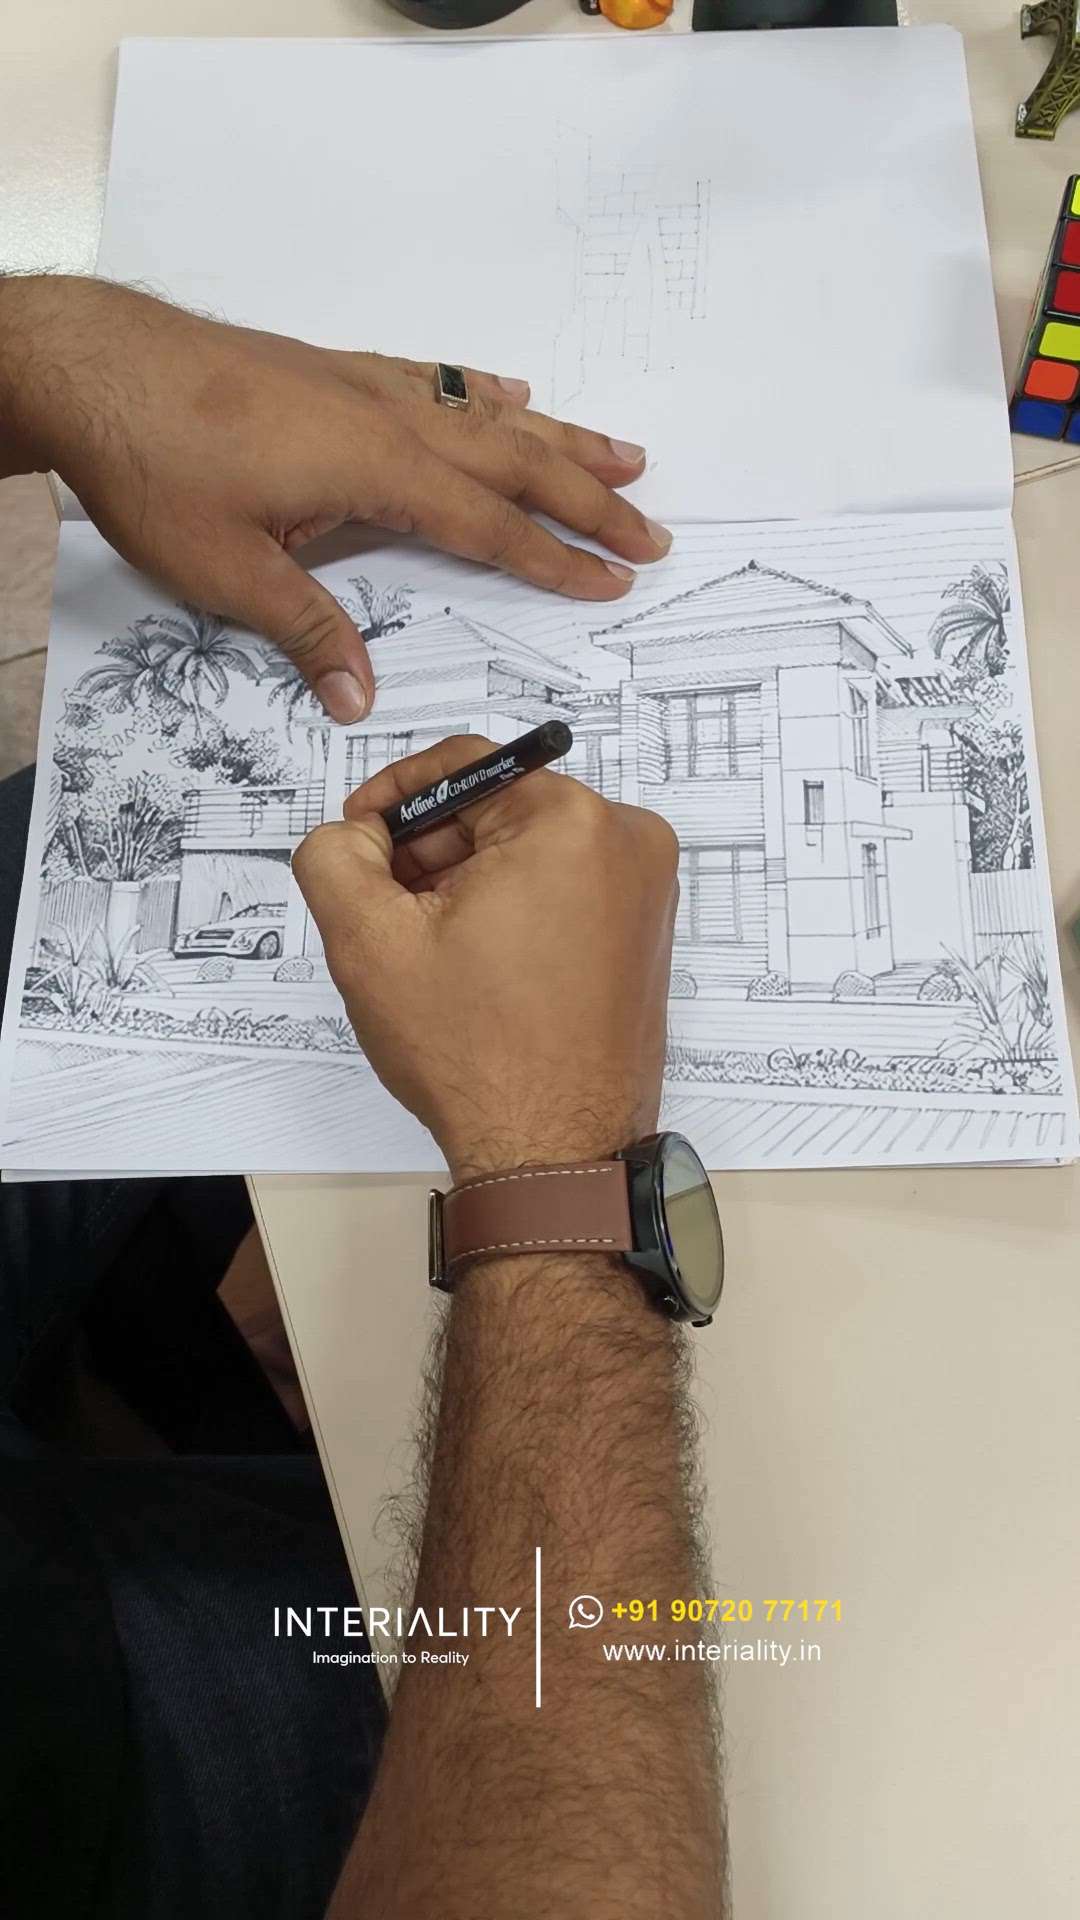 3D Home Visualization

Doing Online Design
▶️Planning
▶️Exterior Design
▶️Interior Design
▶️Landscape Design

Whatsapp: +91 90720 77171

 #keralahomes #keralahomedesigns
#budgethomes #shorts
#contemporaryhouse
#veedu #homeconcept #budgethomes #designerconcept #architecture #indiadesign